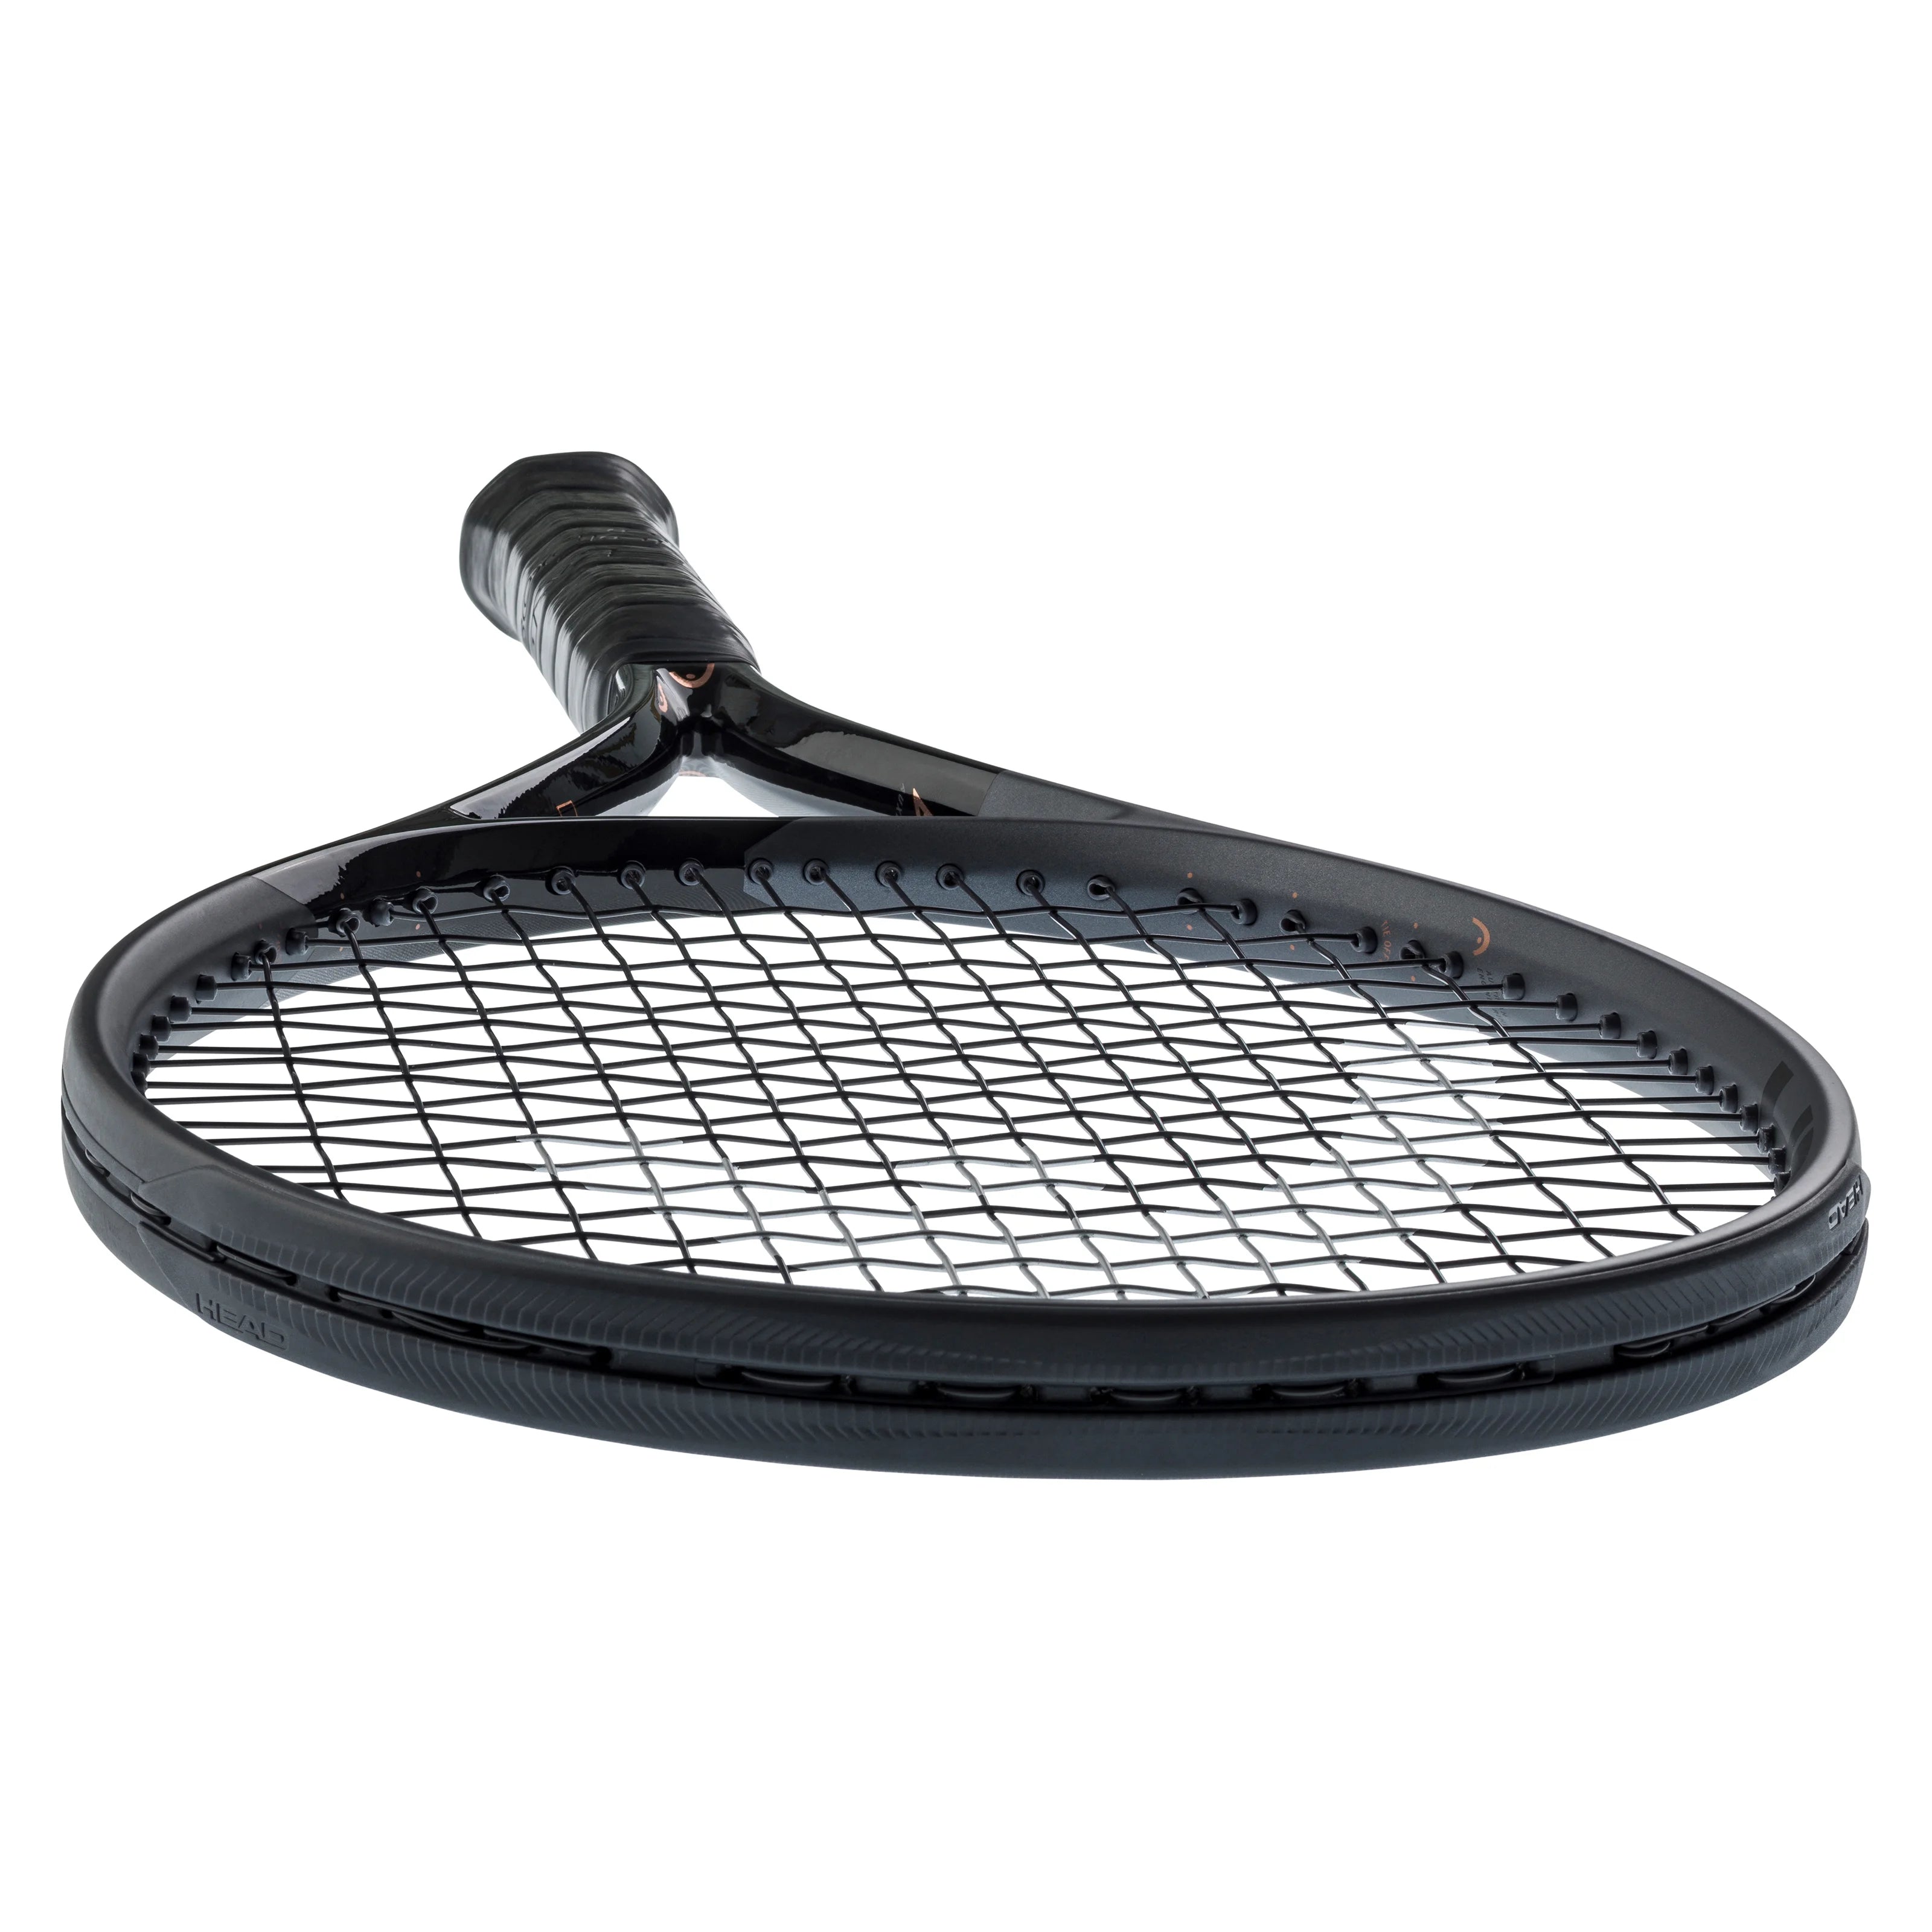 Solinco X-Natural Tennis String Reel-16G-Black, Racquet String -   Canada